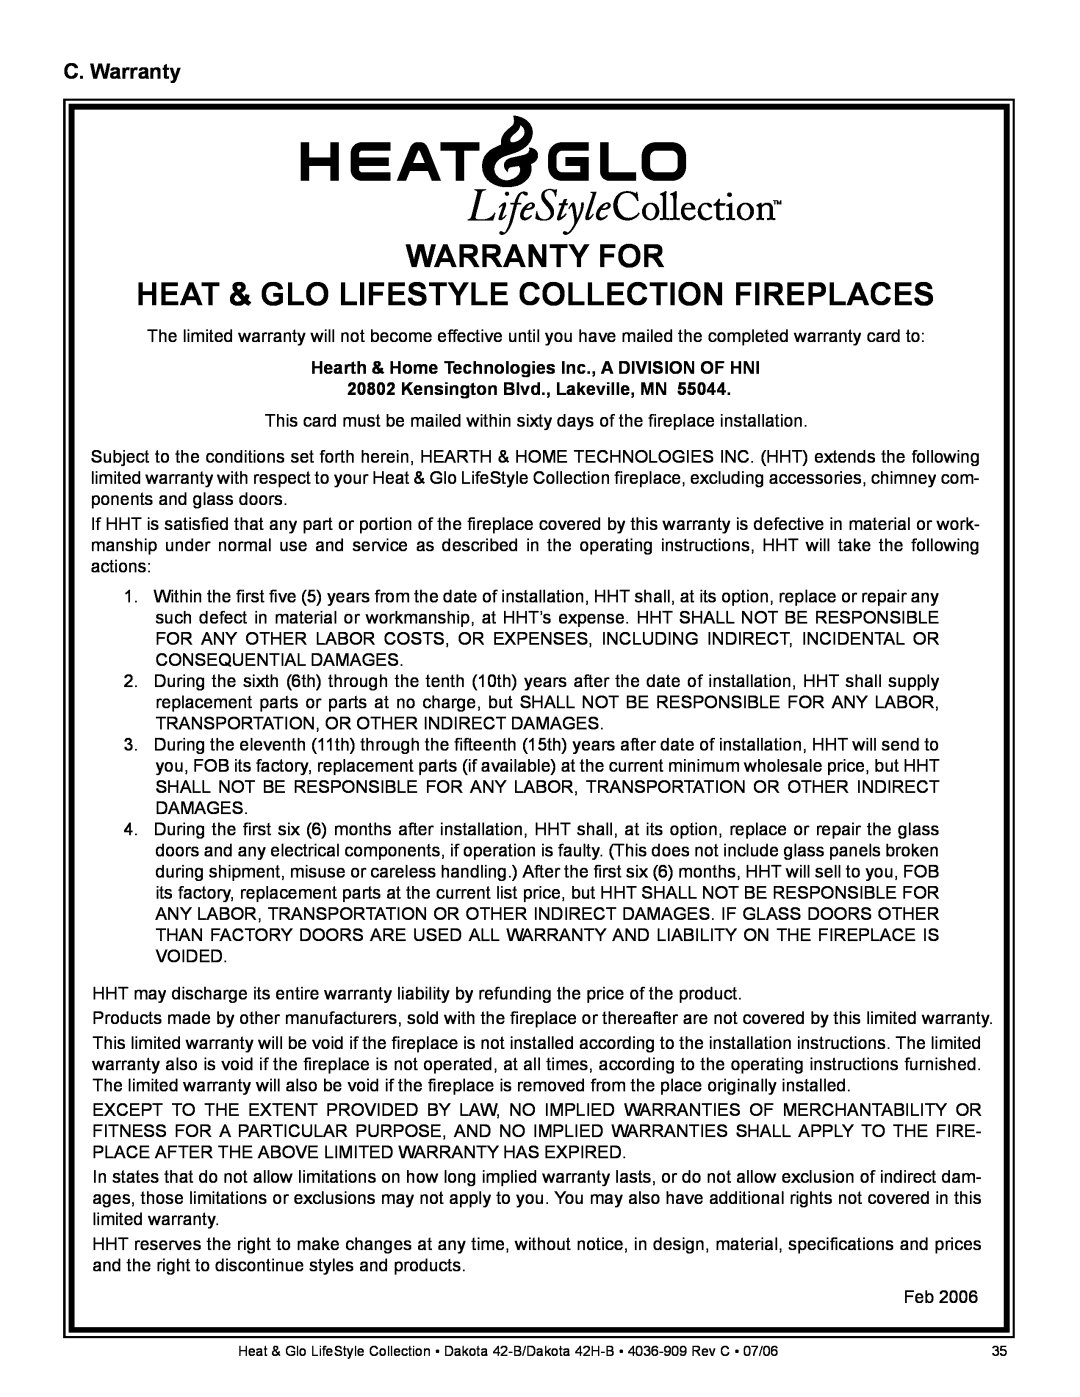 Heat & Glo LifeStyle Dakota 42H-B, Dakota 42-B C. Warranty, Warranty For, Heat & Glo Lifestyle Collection Fireplaces 